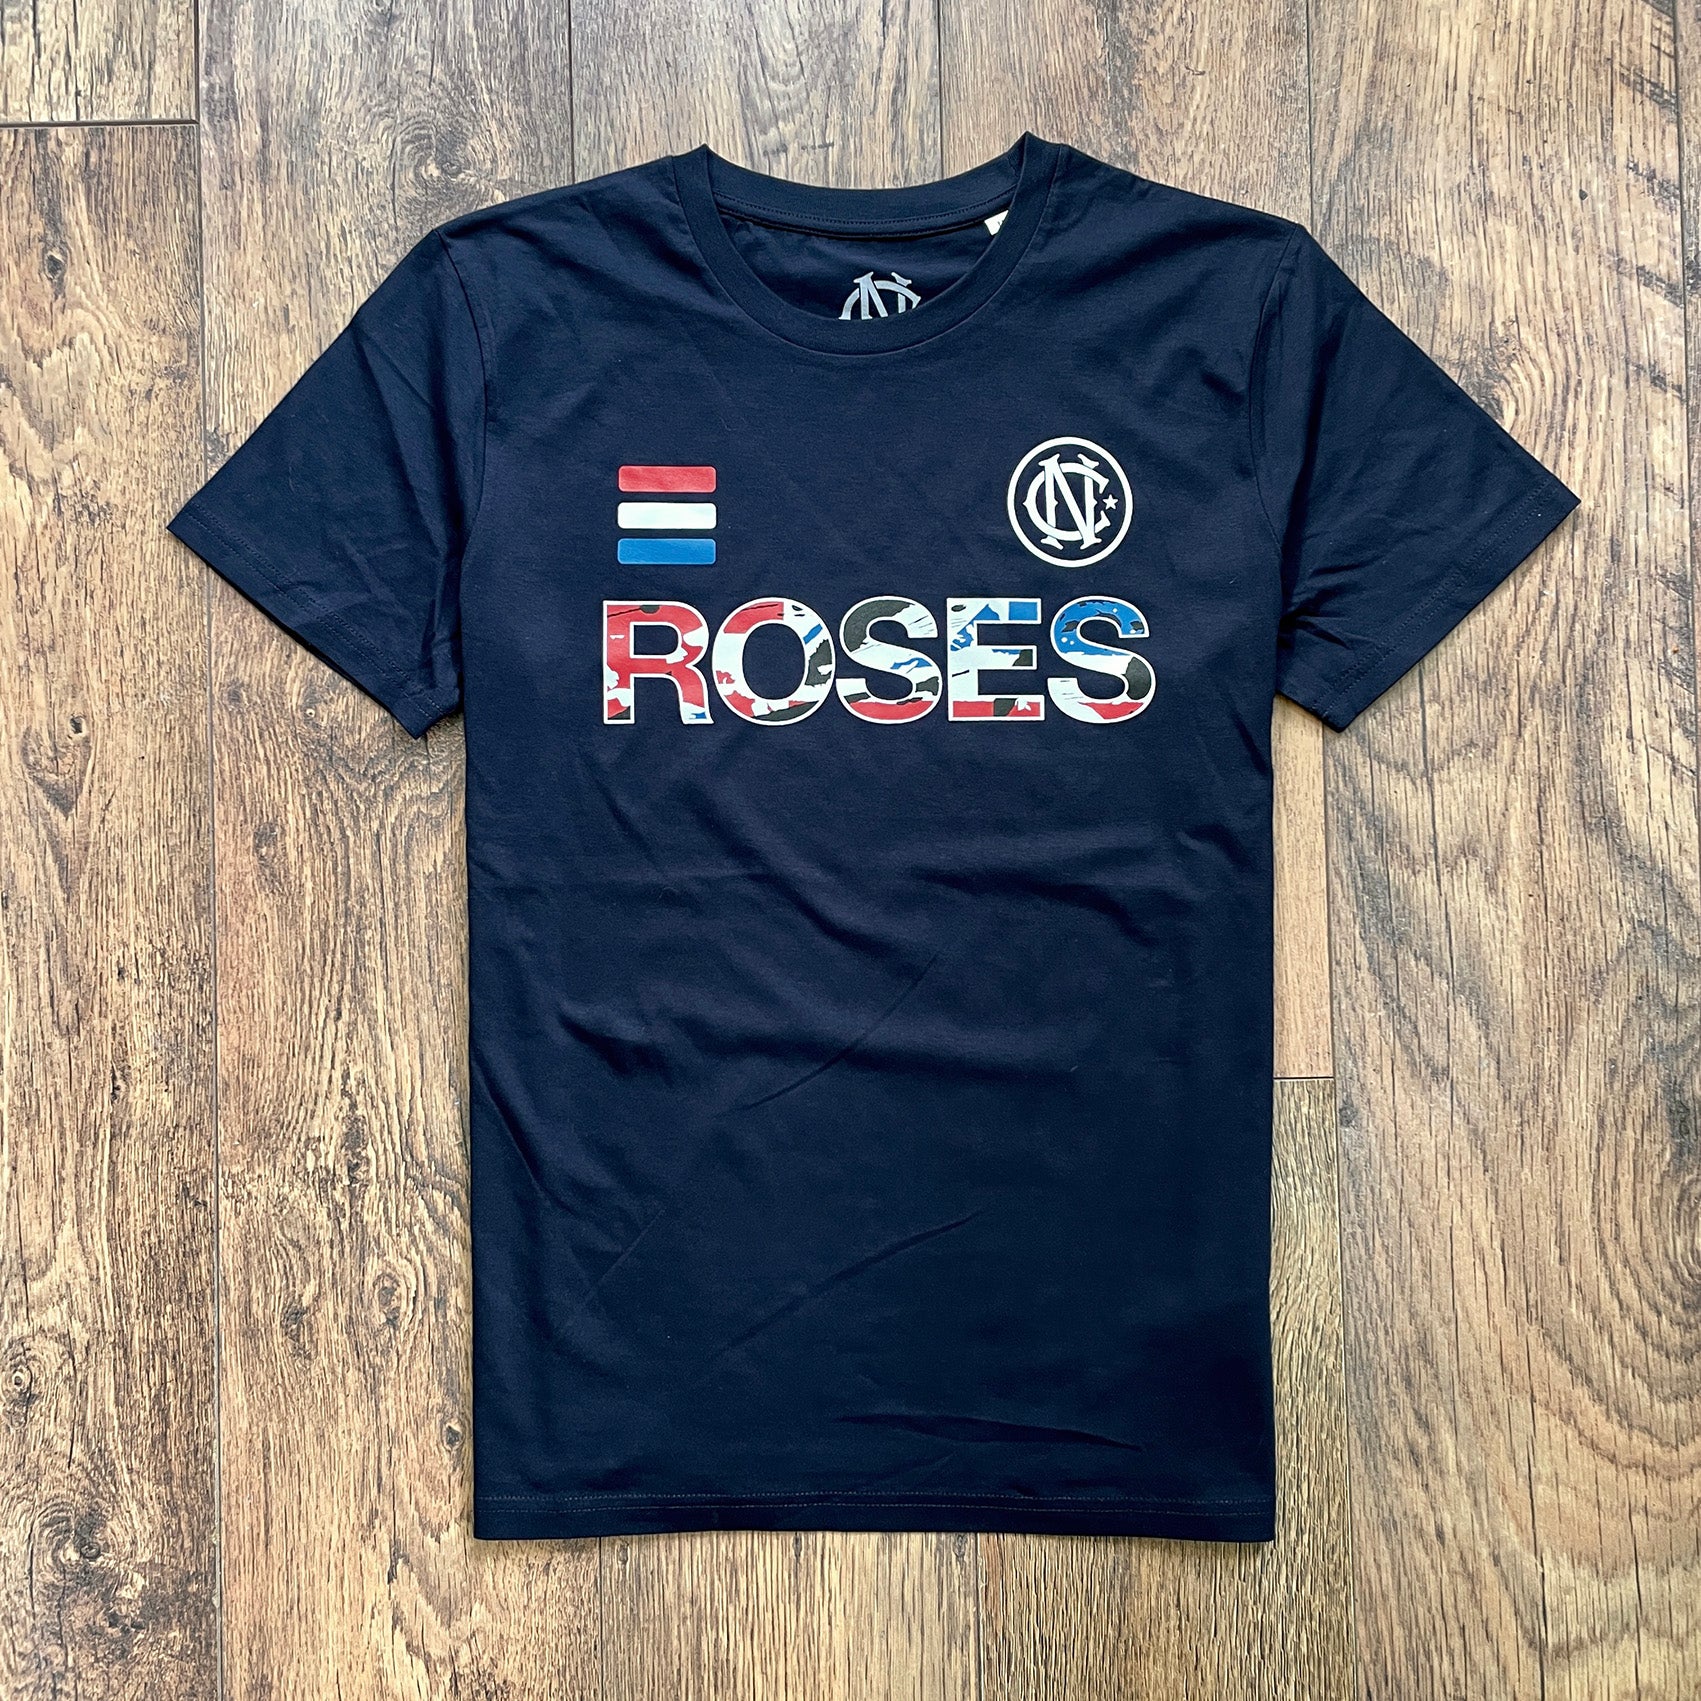 Stone Roses t-shirt